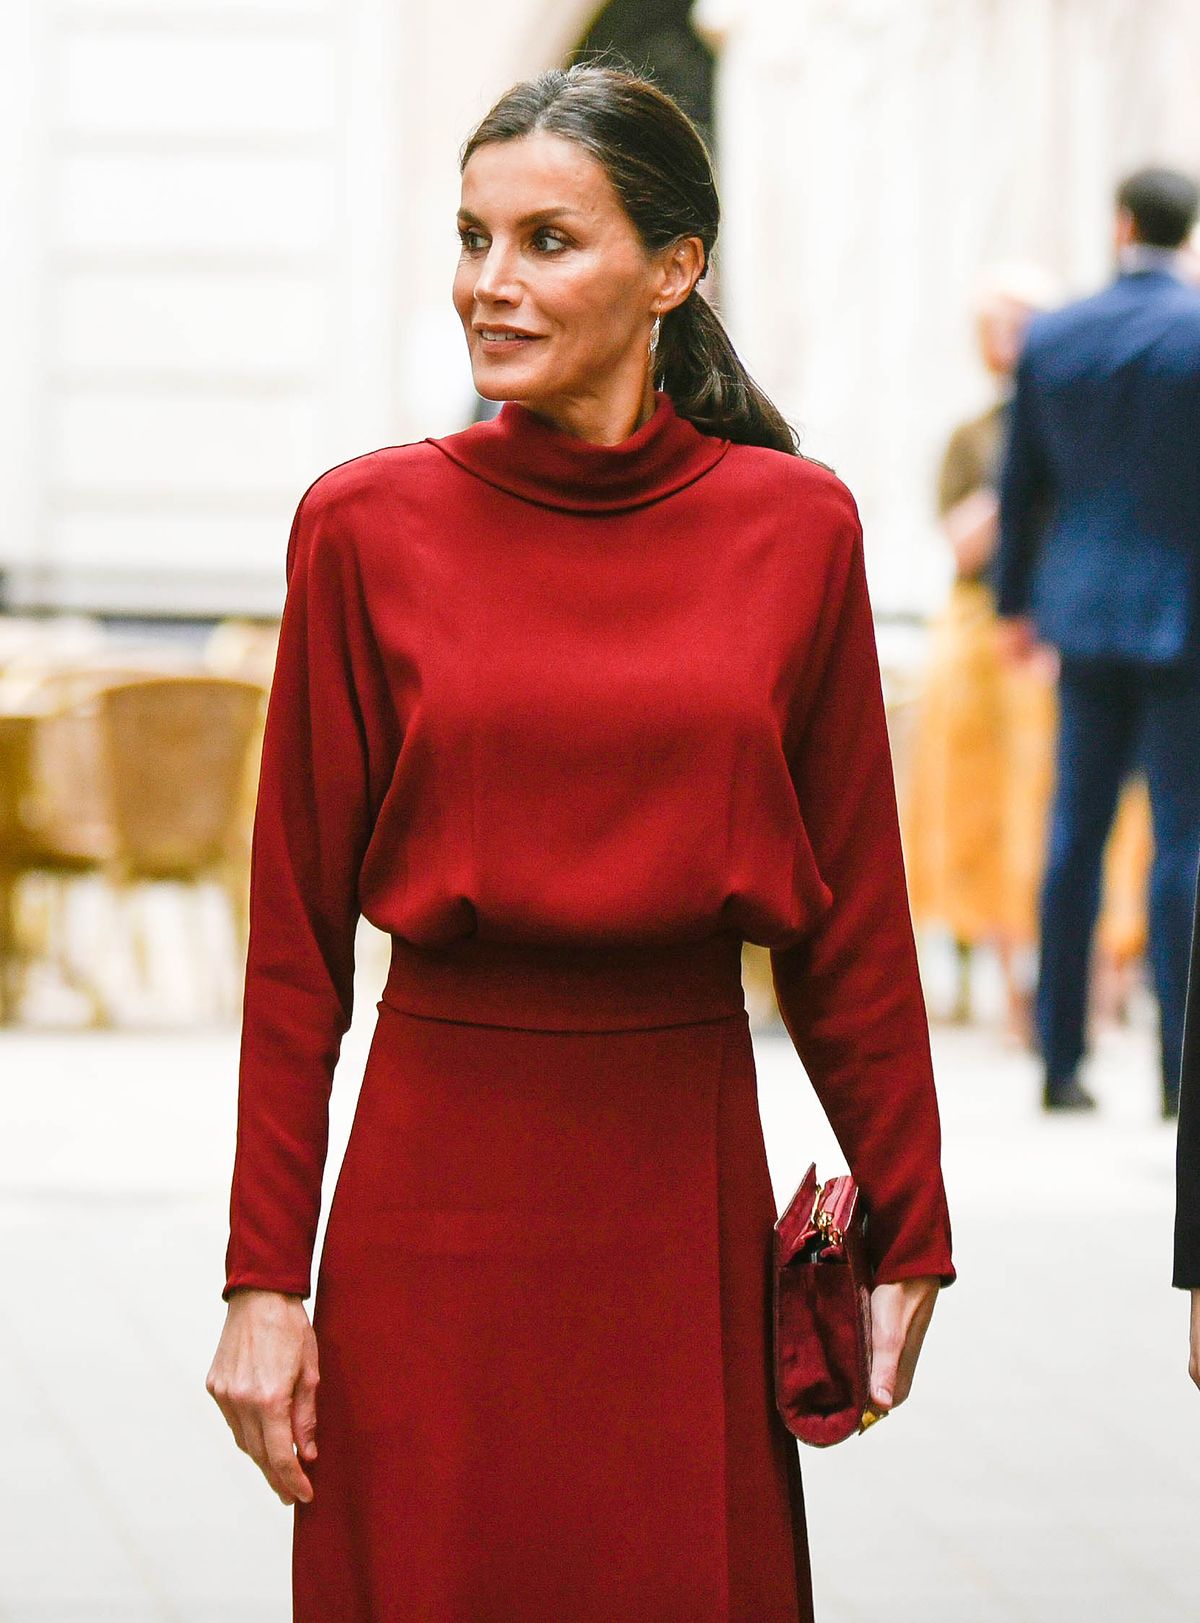 La reina Letizia: con vestido rojo de Massimo Dutti Palma